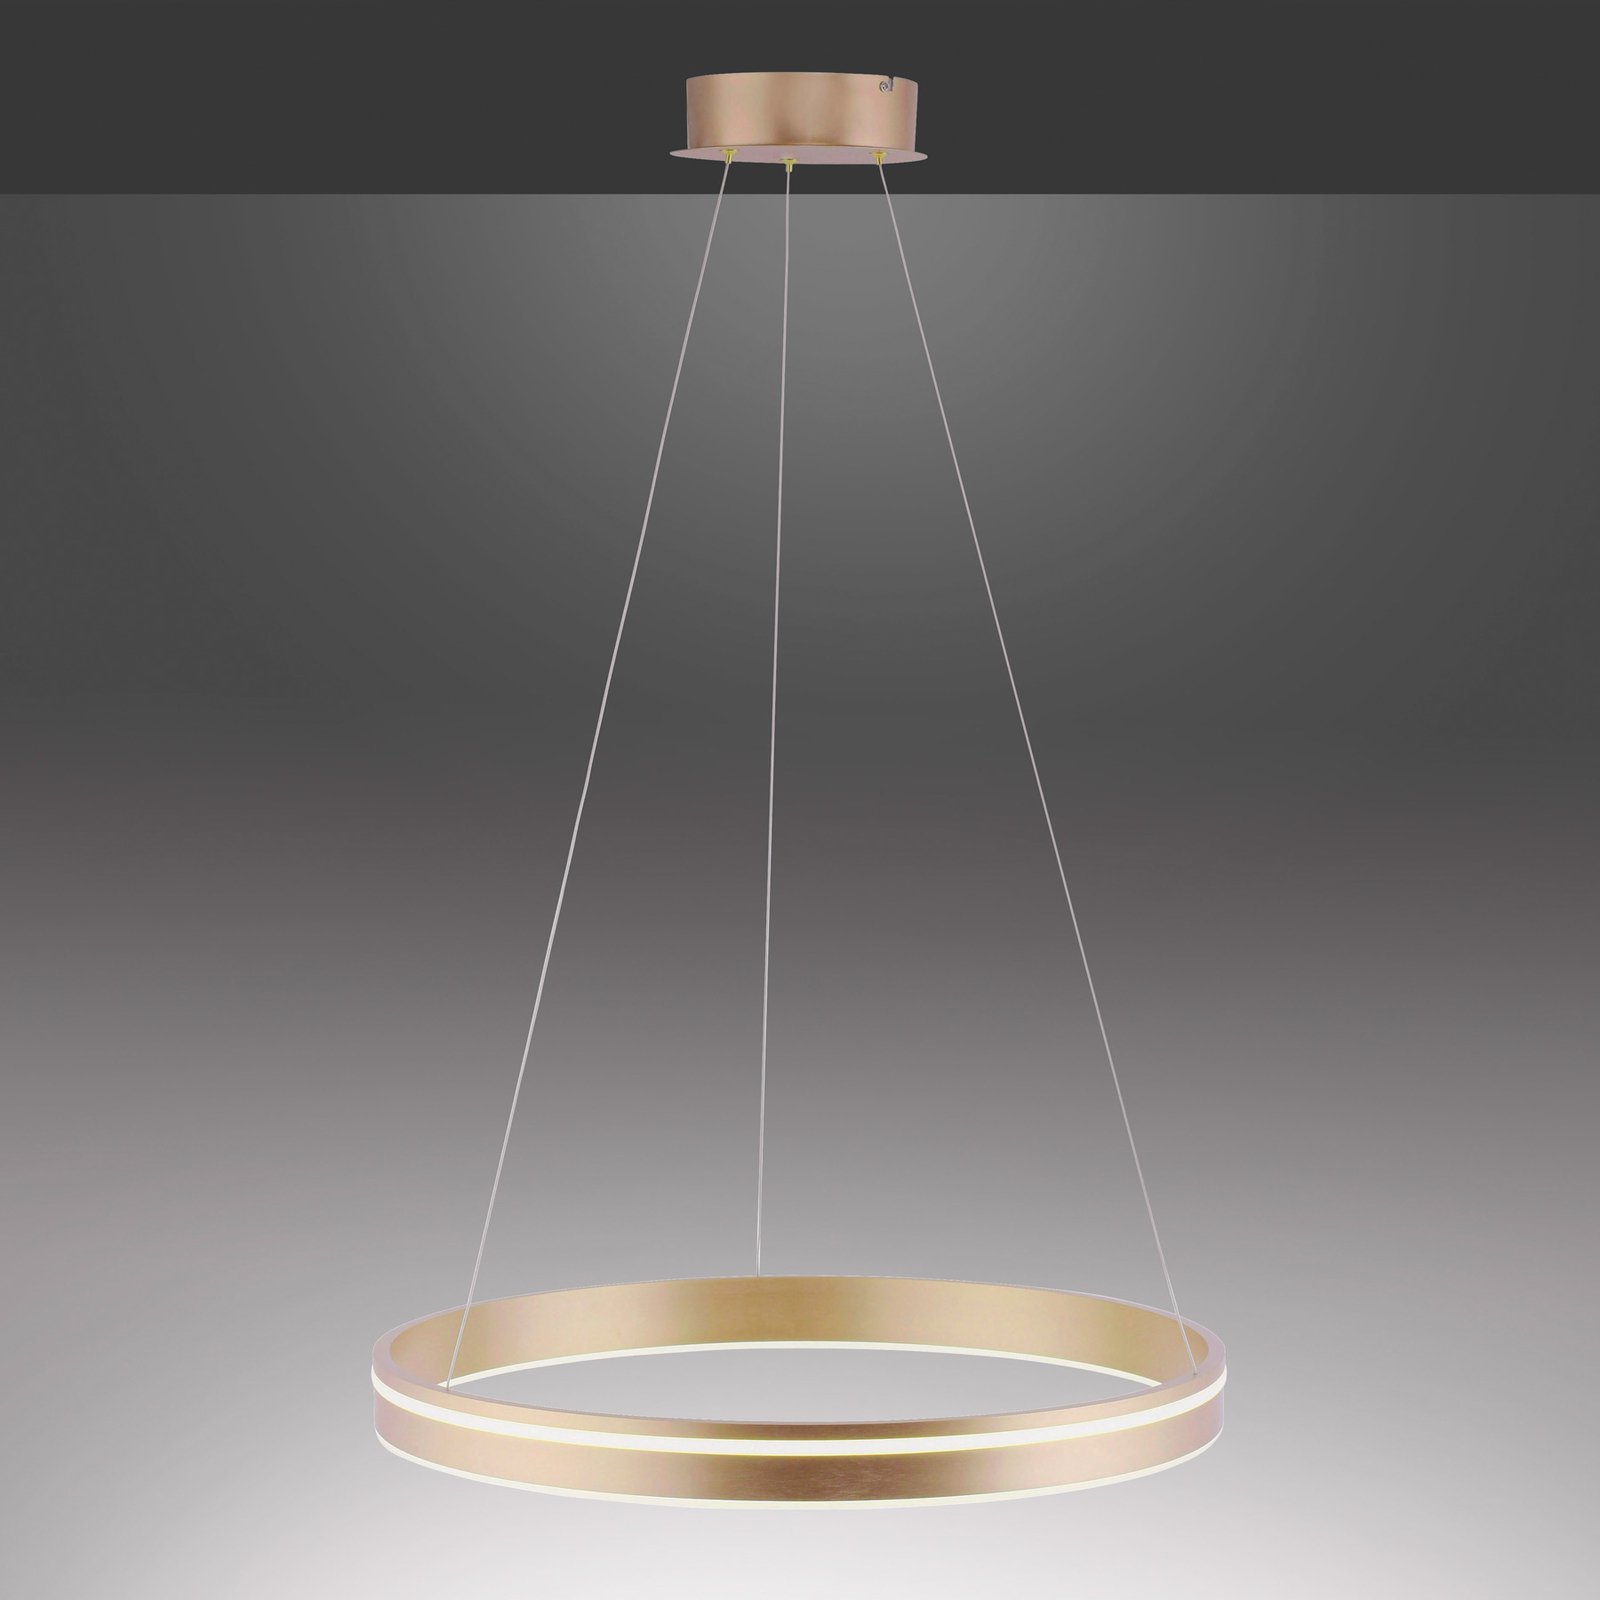 Paul Neuhaus Q-VITO lampa wisząca LED, 1 pierścień